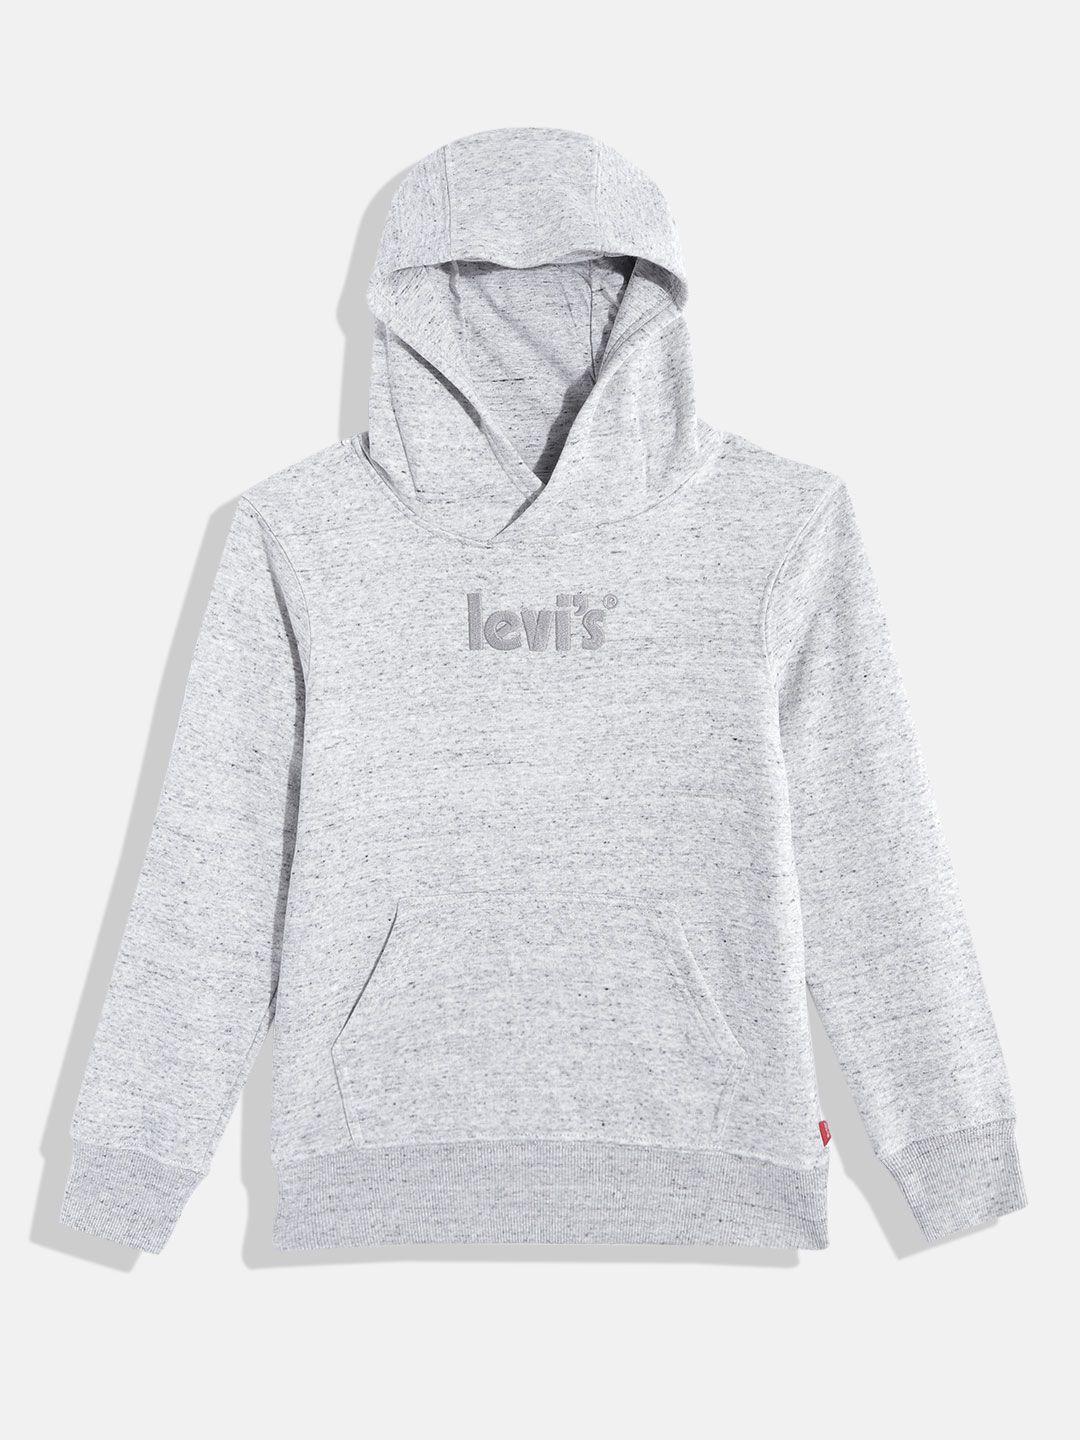 levis boys grey melange brand logo embroidered hooded sweatshirt